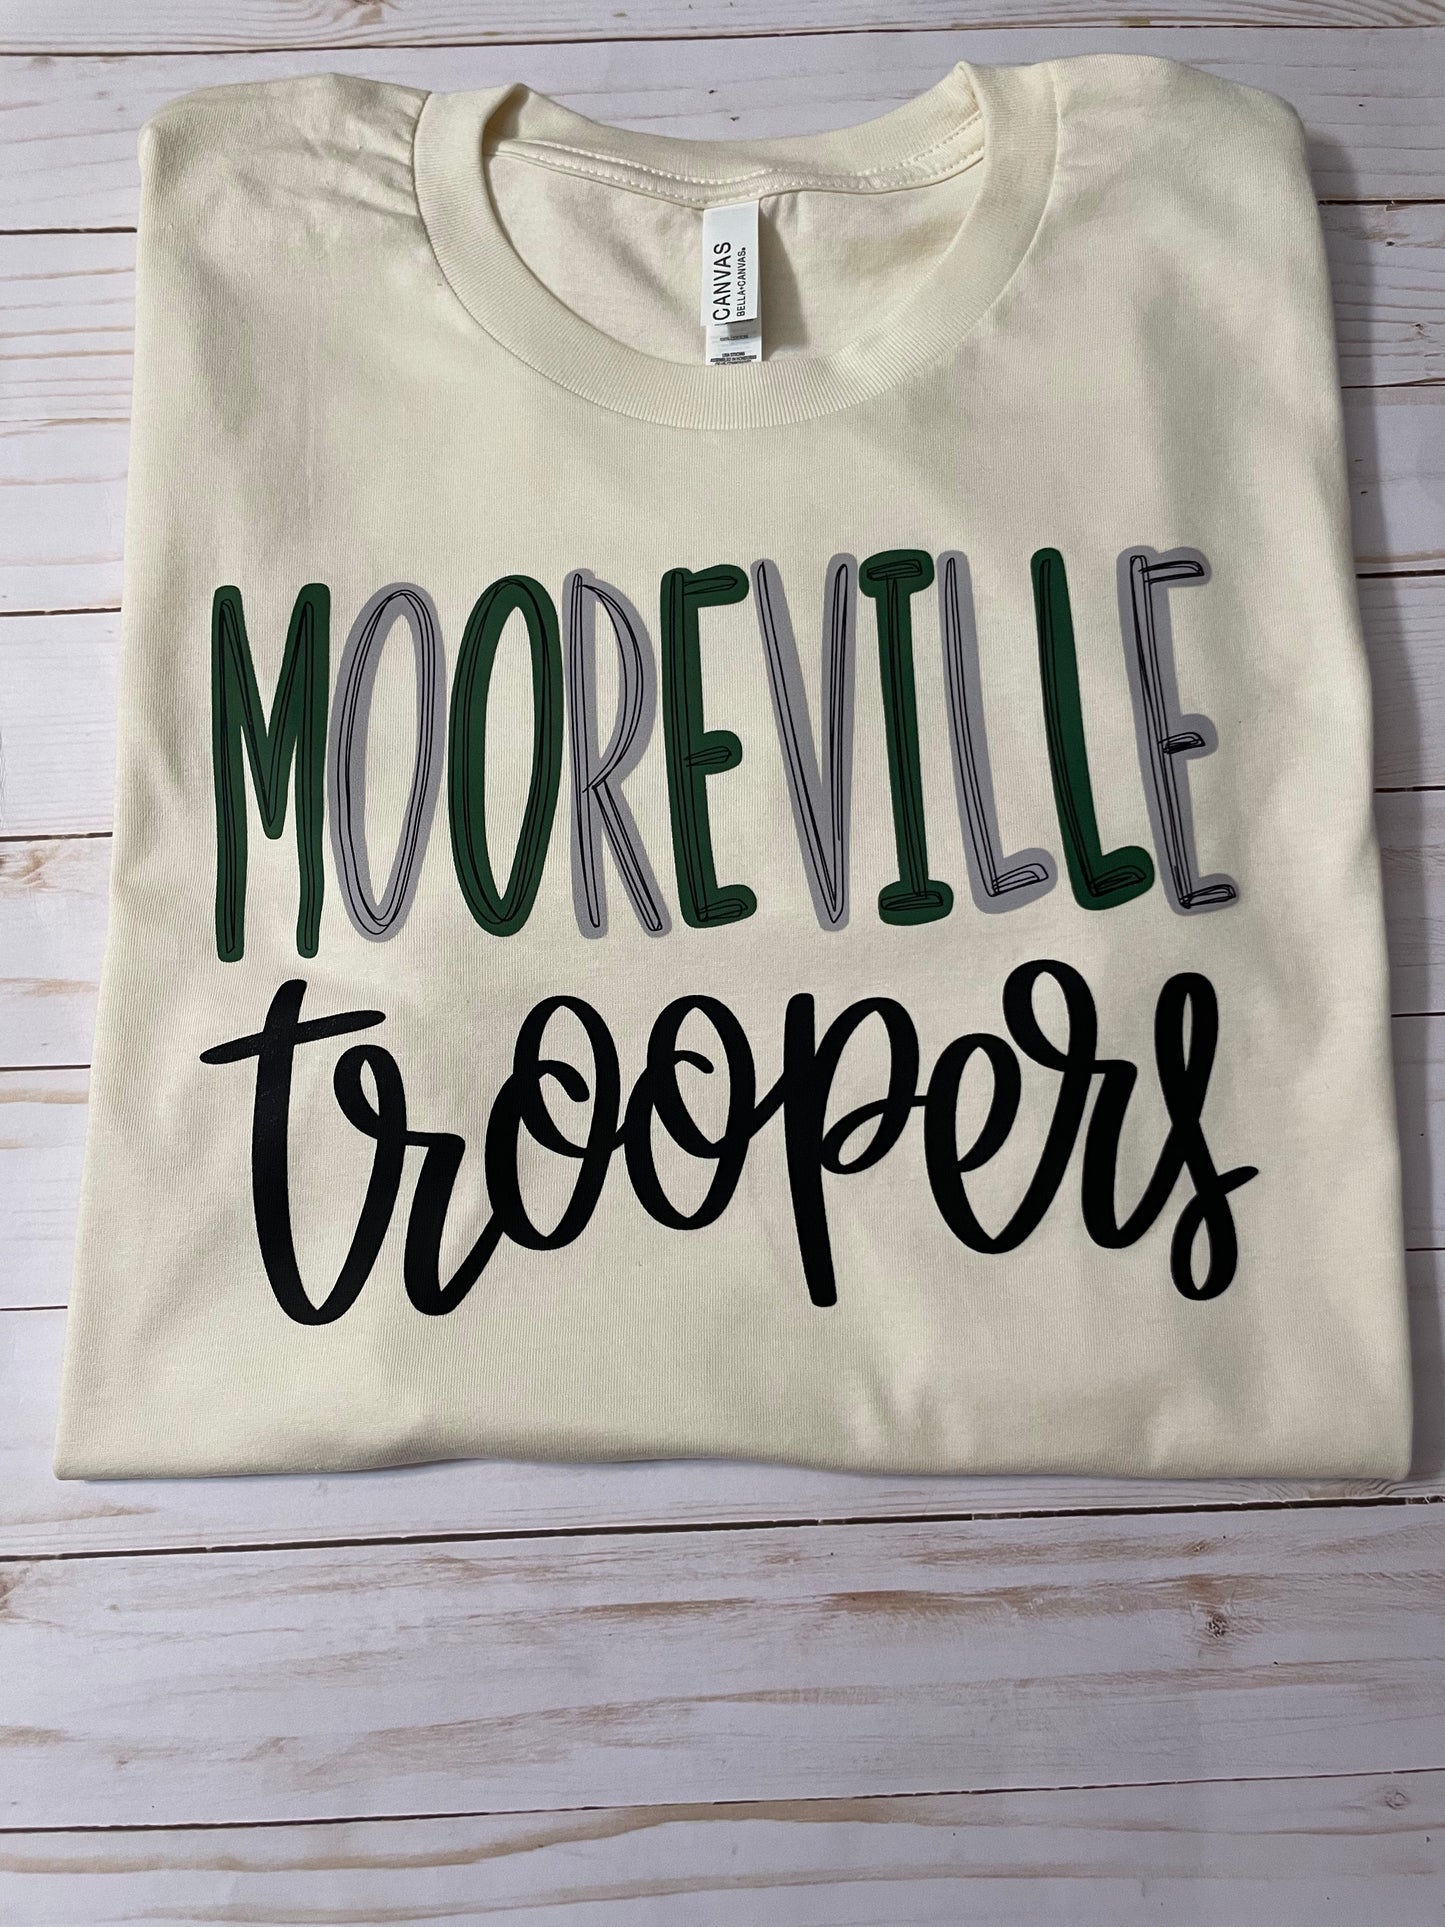 Mooreville Troopers Shirt 2